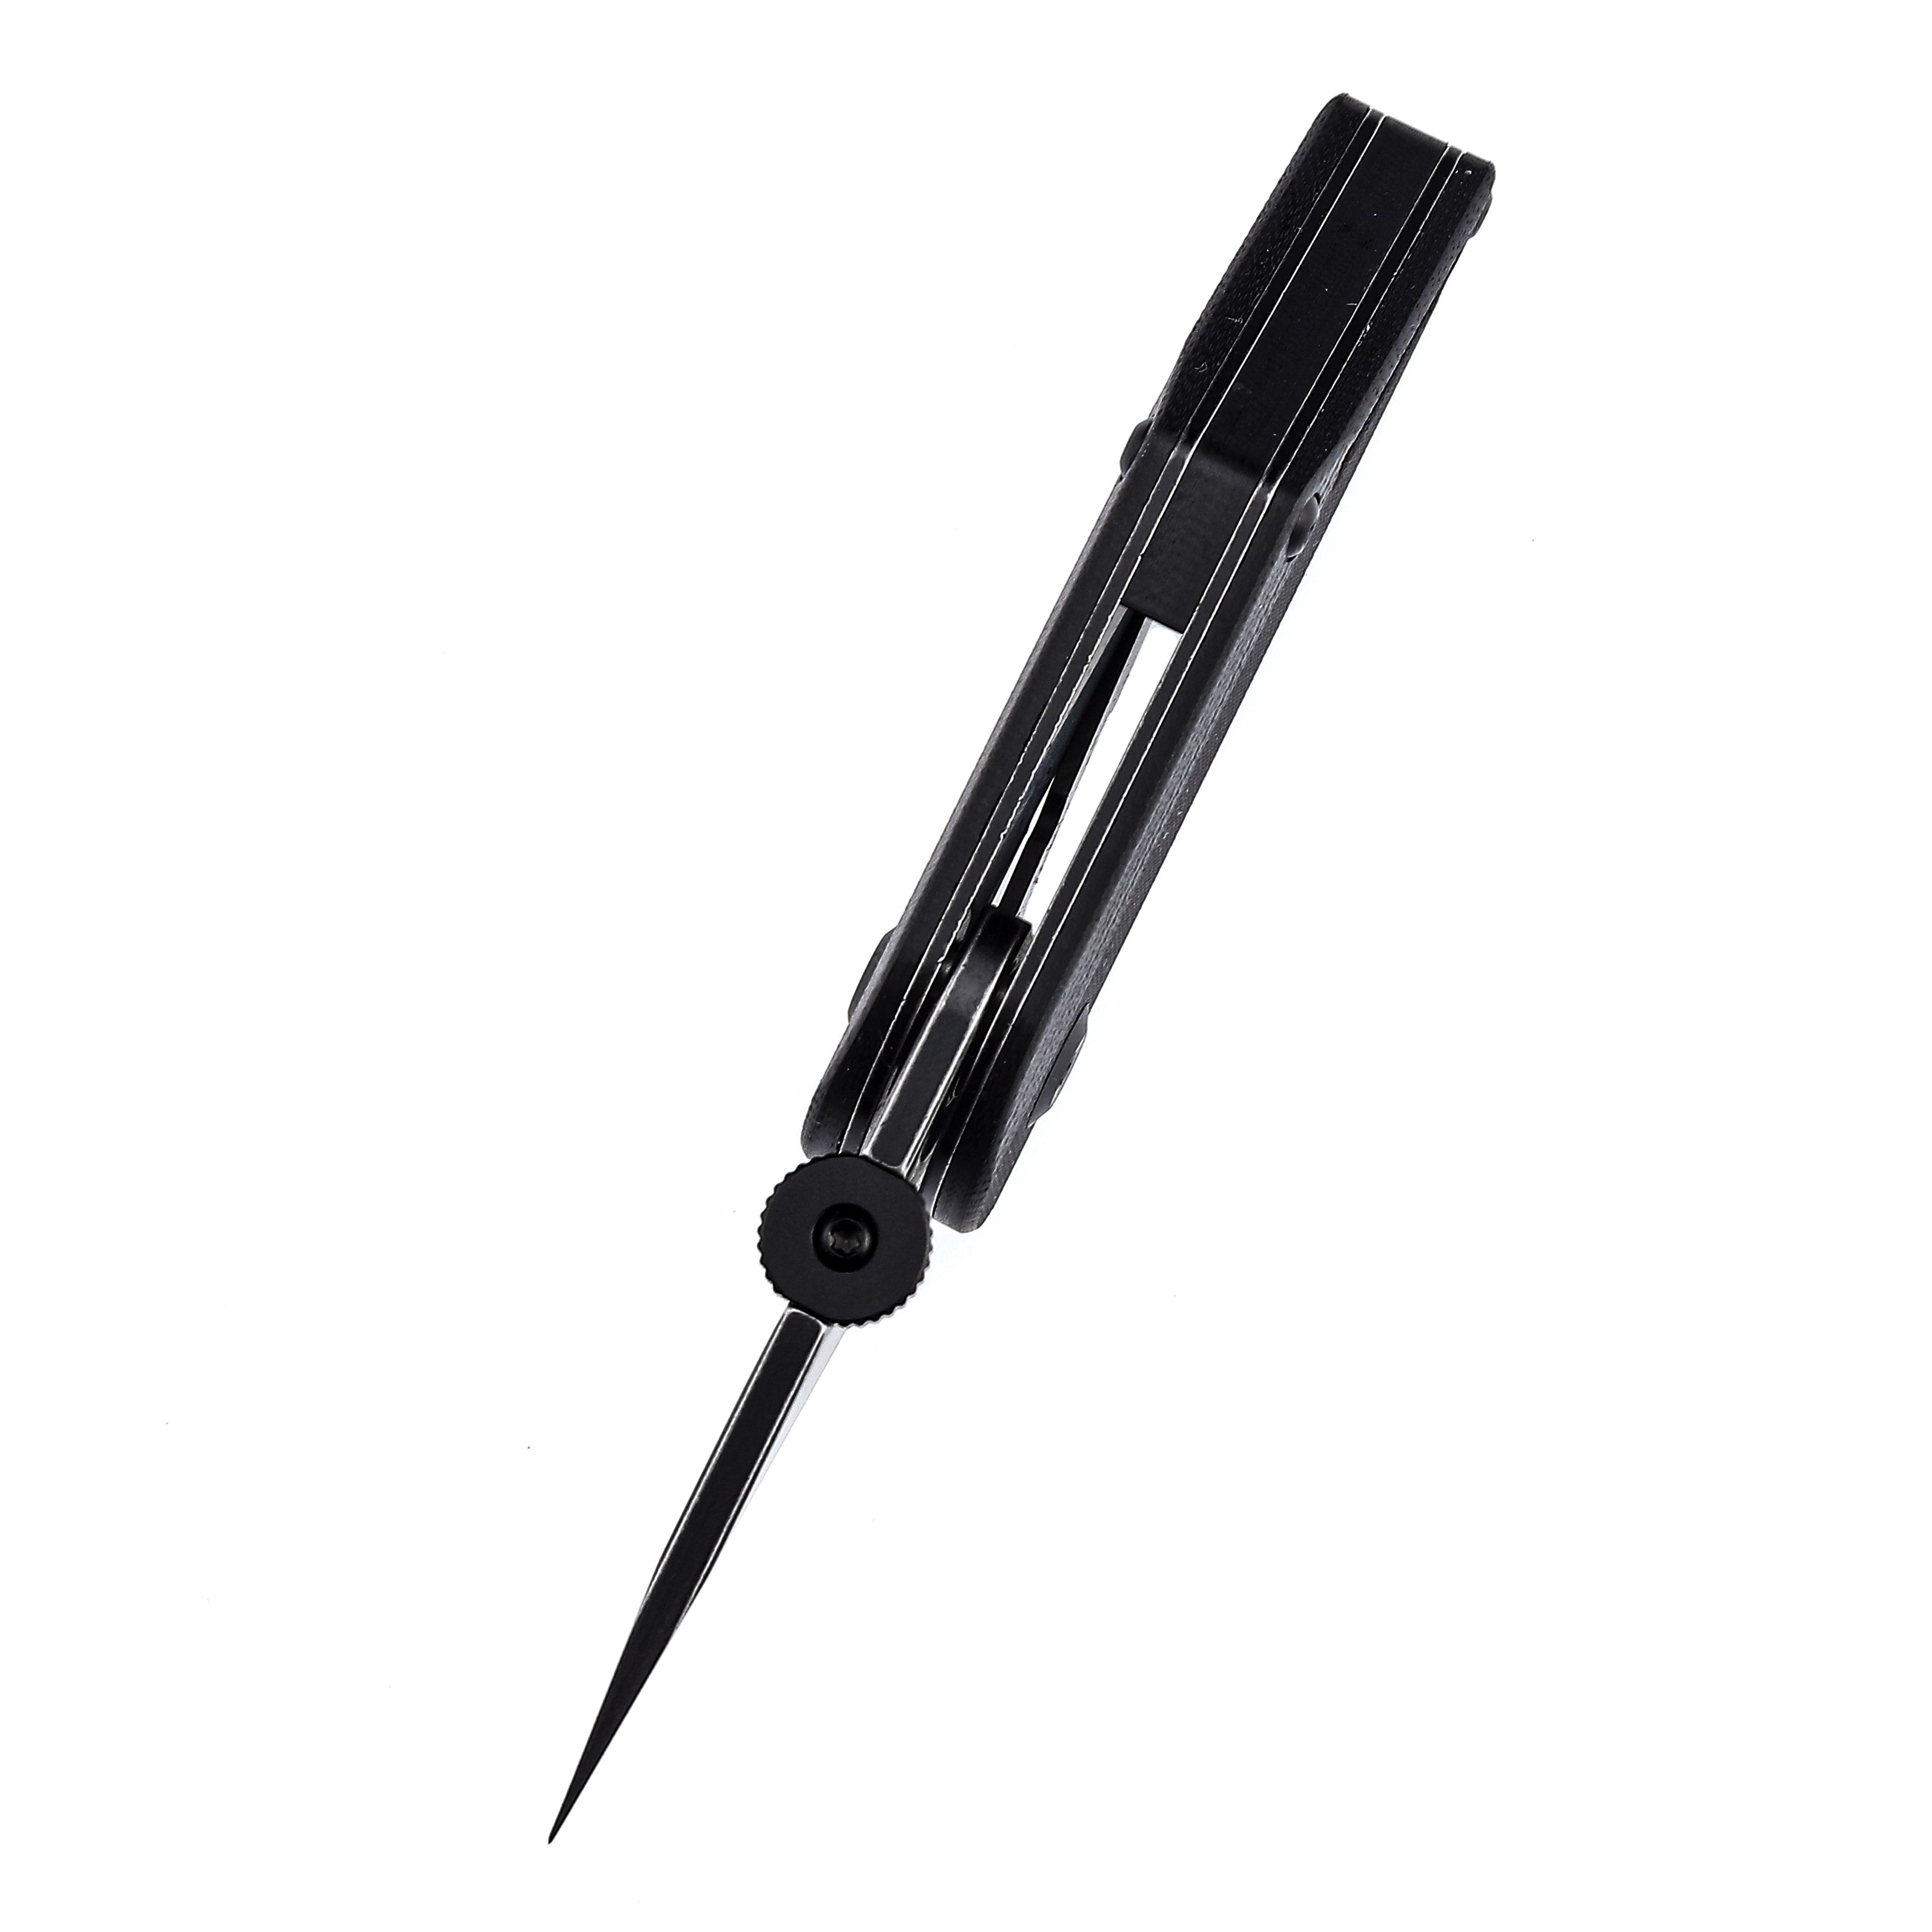 Kansept 刀具 Dash T3045A1 154CM 刀片黑色 G10 内衬锁 Edc 刀具